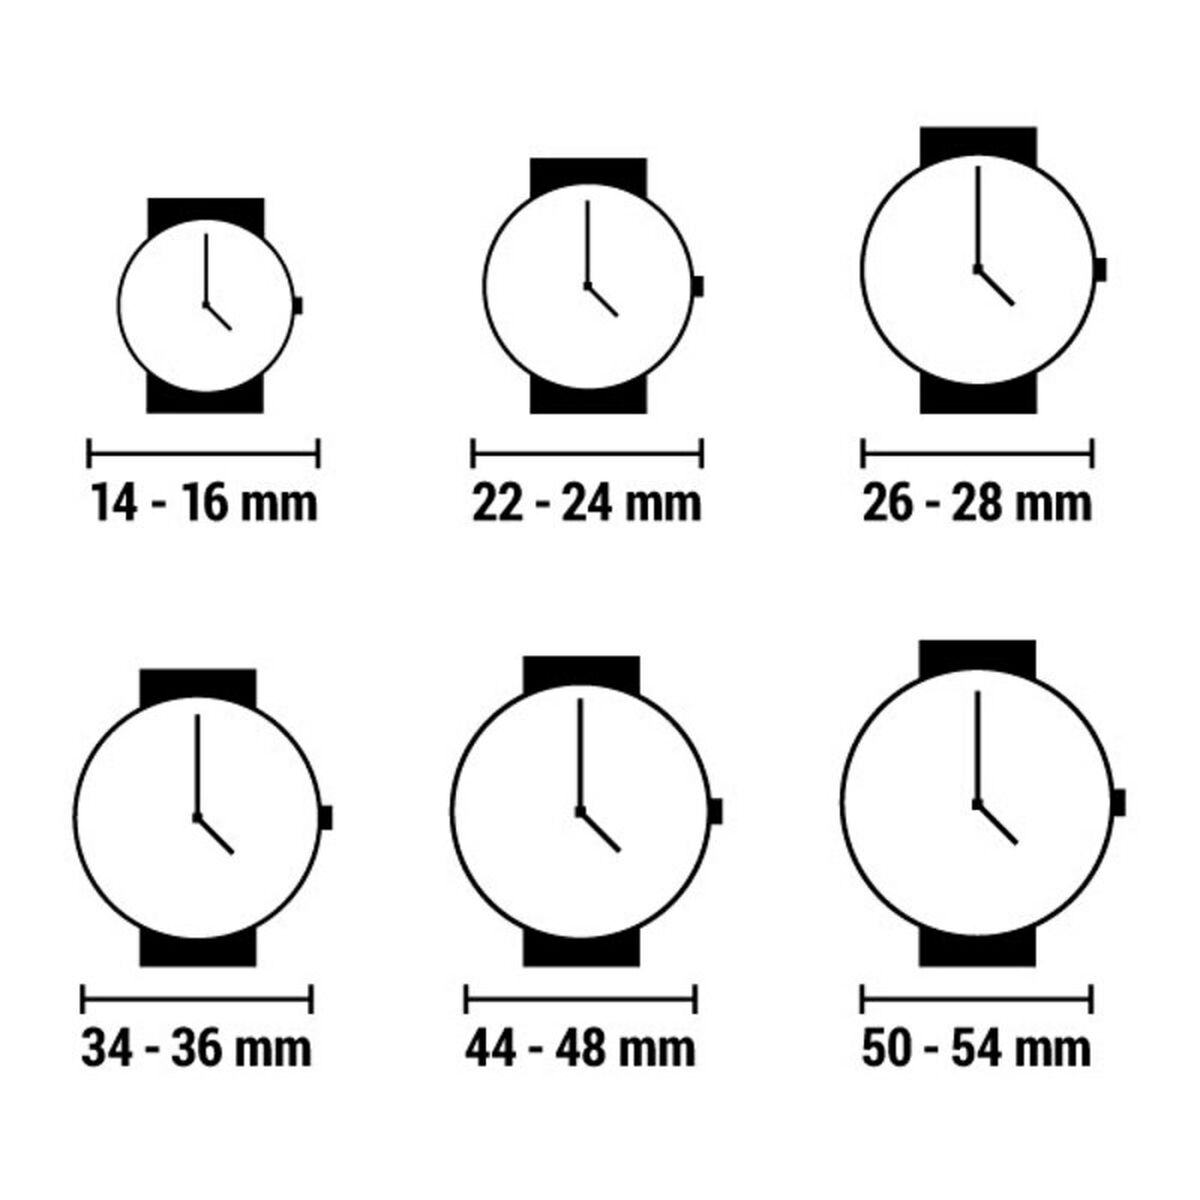 Horloge Dames Komono KOM-W2472 (Ø 36 mm)